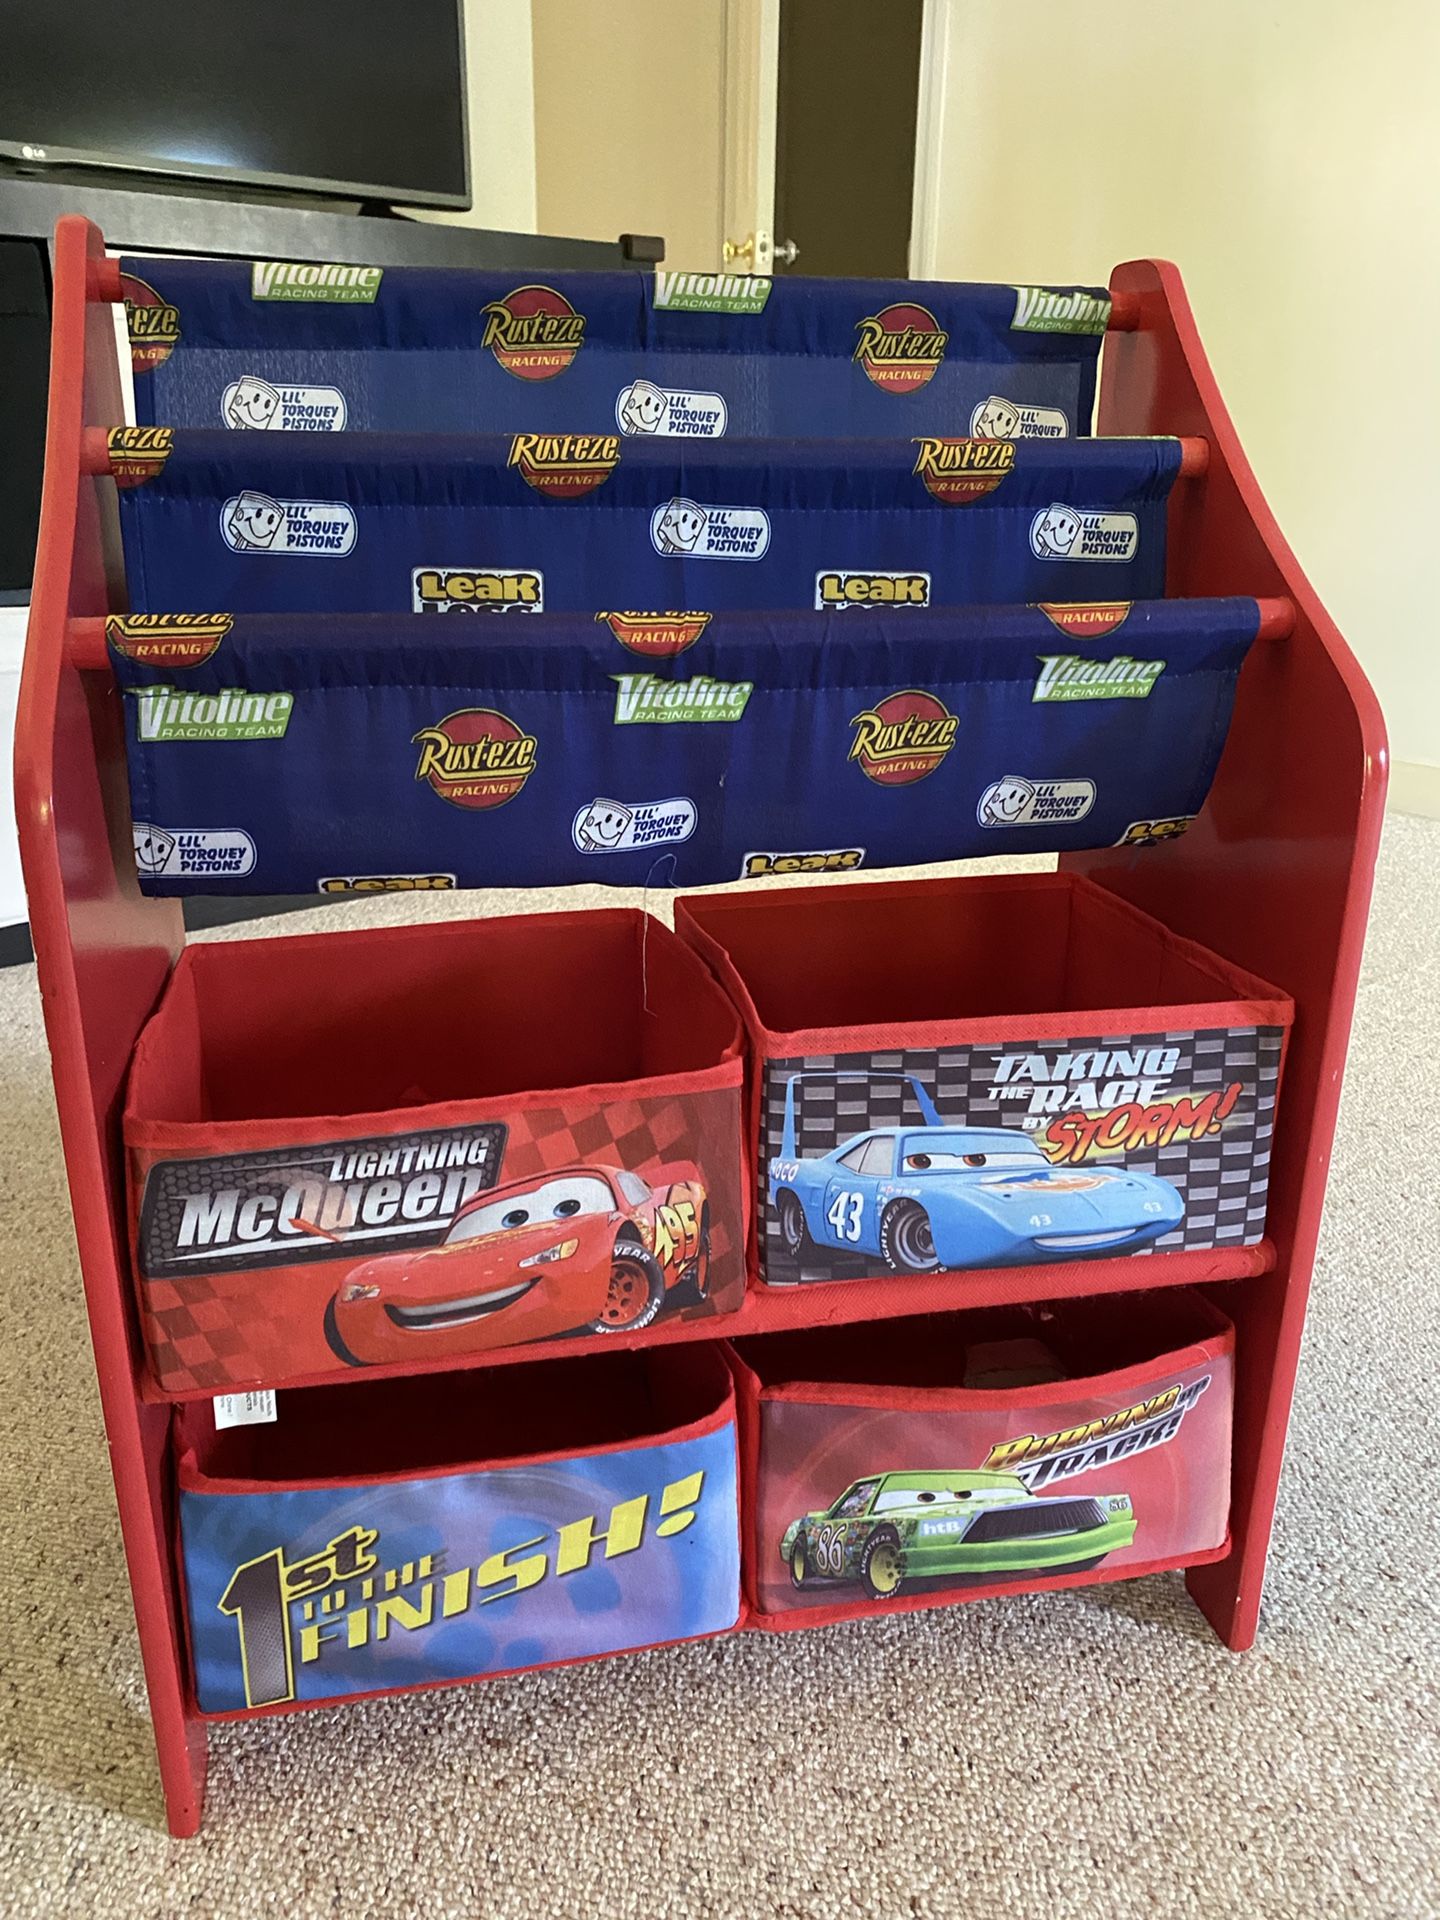 Bookshelf with toys organizer for kids